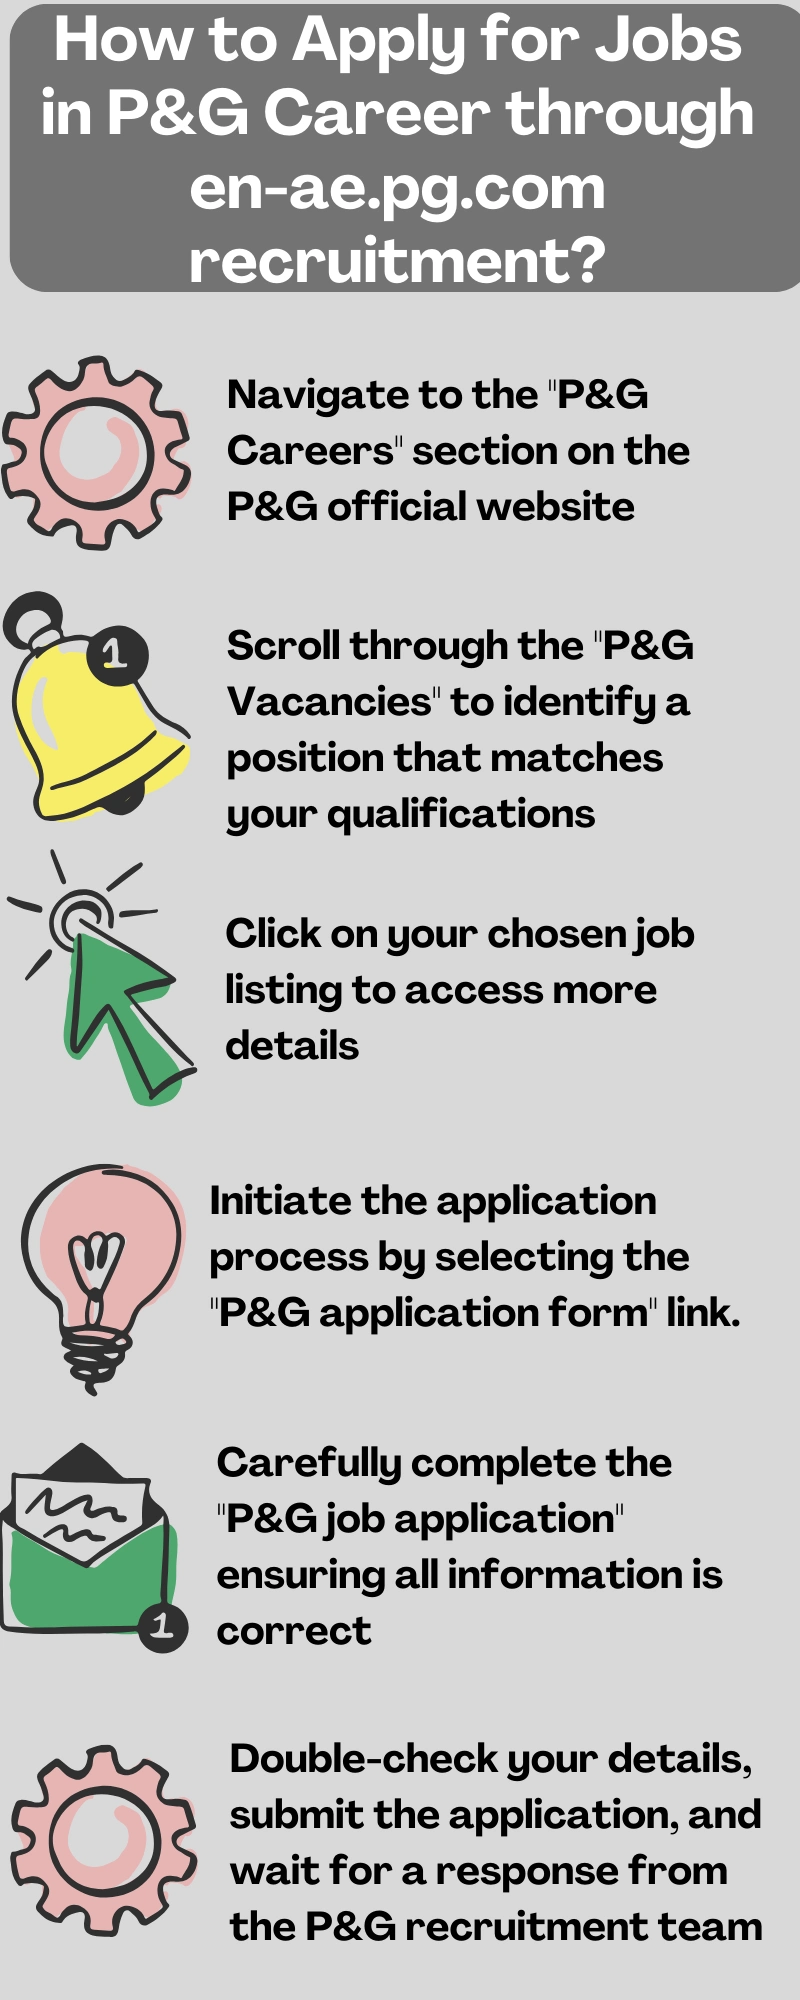 How to Apply for Jobs in P&G Career through en-ae.pg.com recruitment?